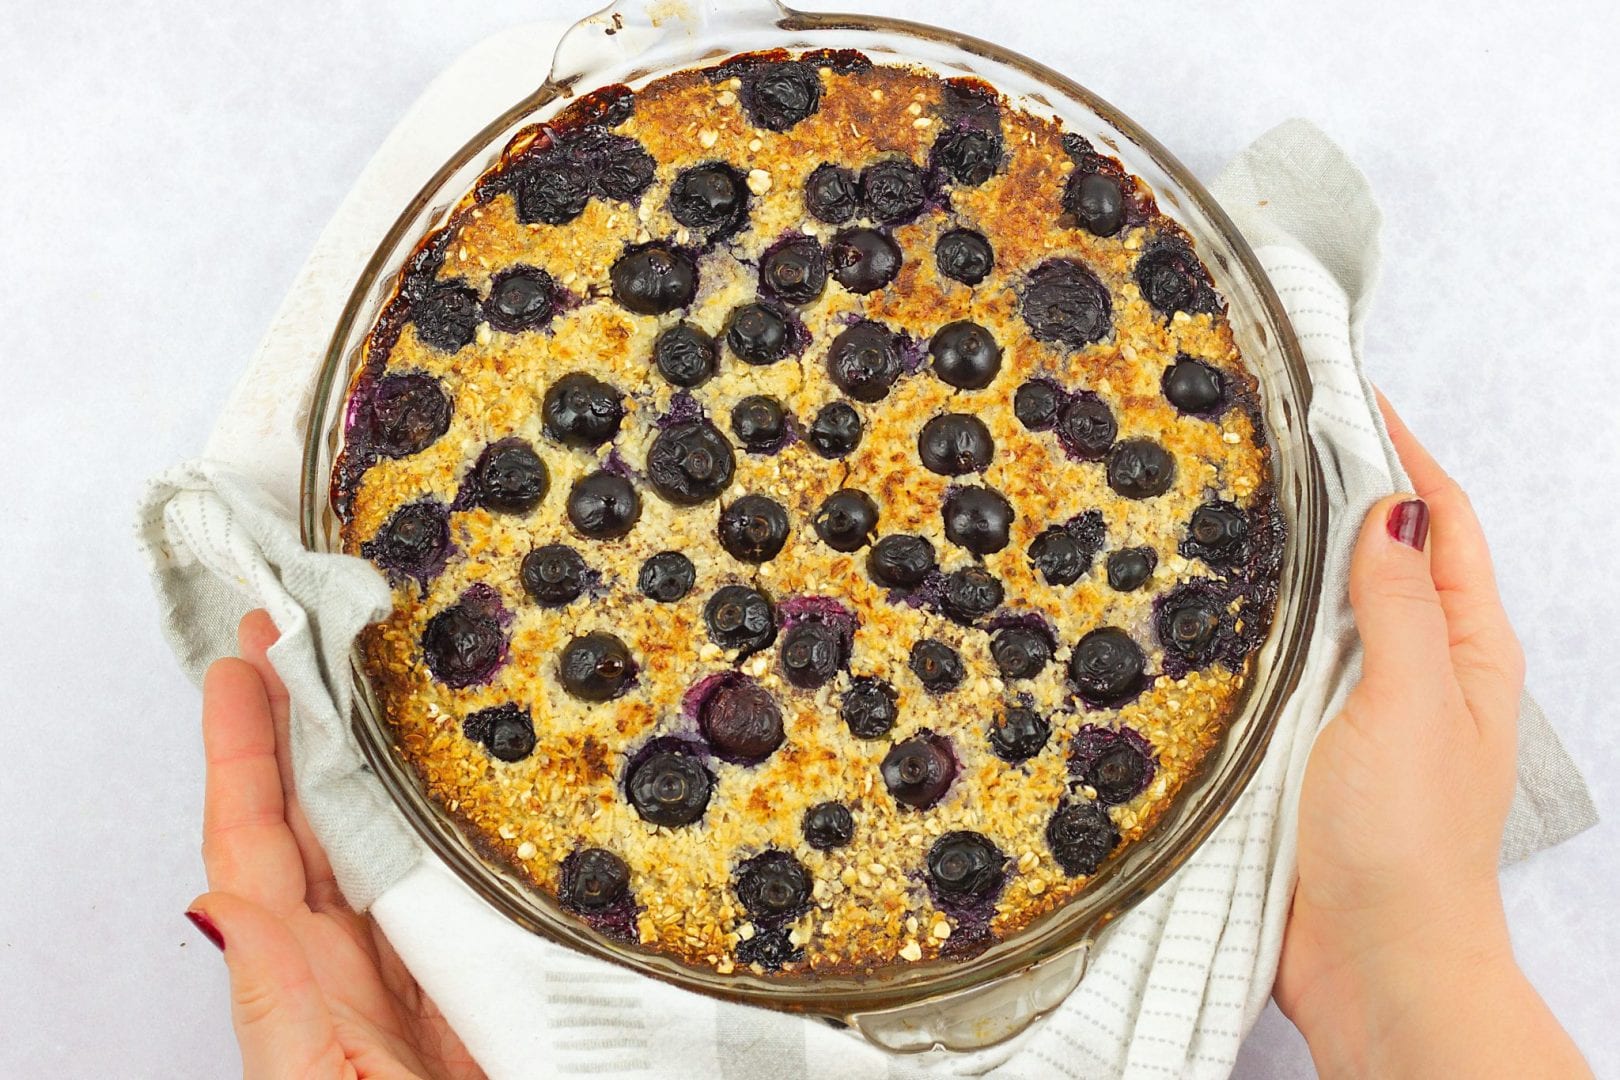 baked oats - porridge bake banana and blueberries - healthy breakfast recipes